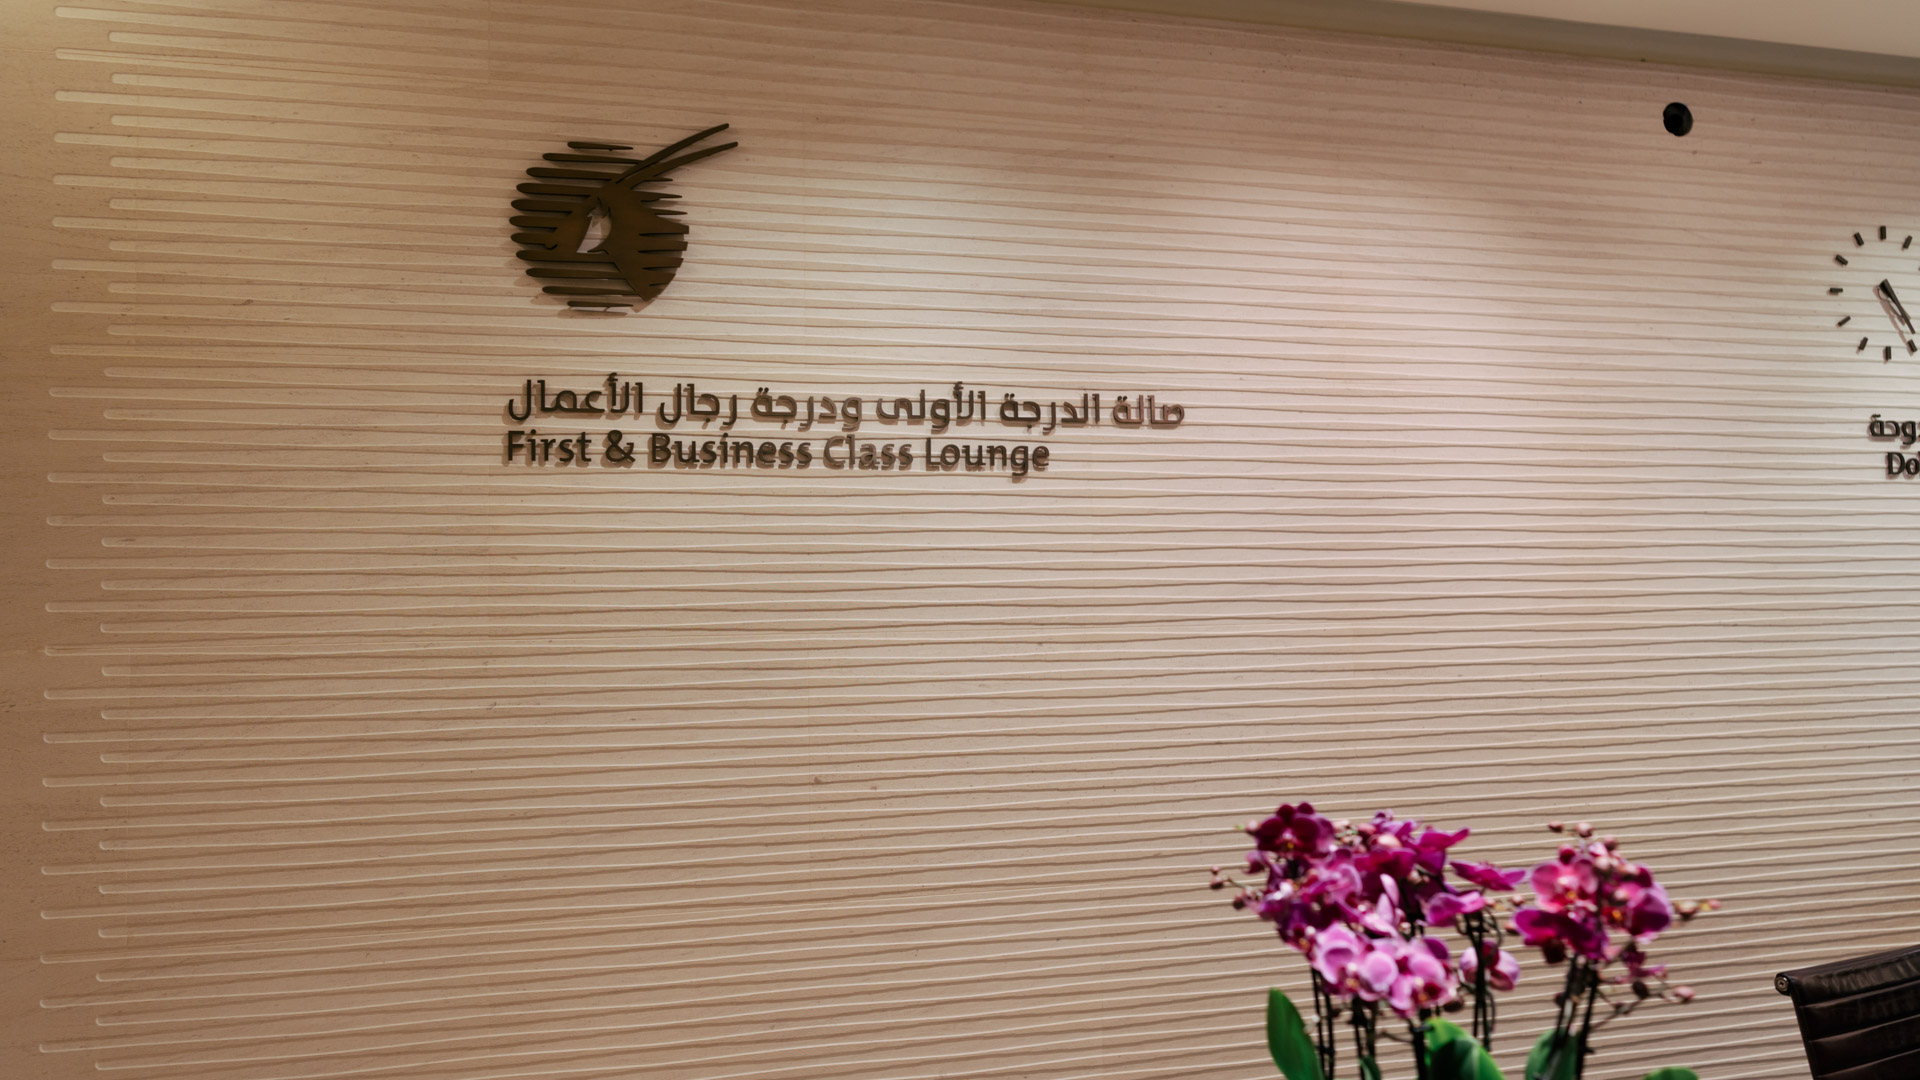 Qatar Airways Arrival Lounge signage